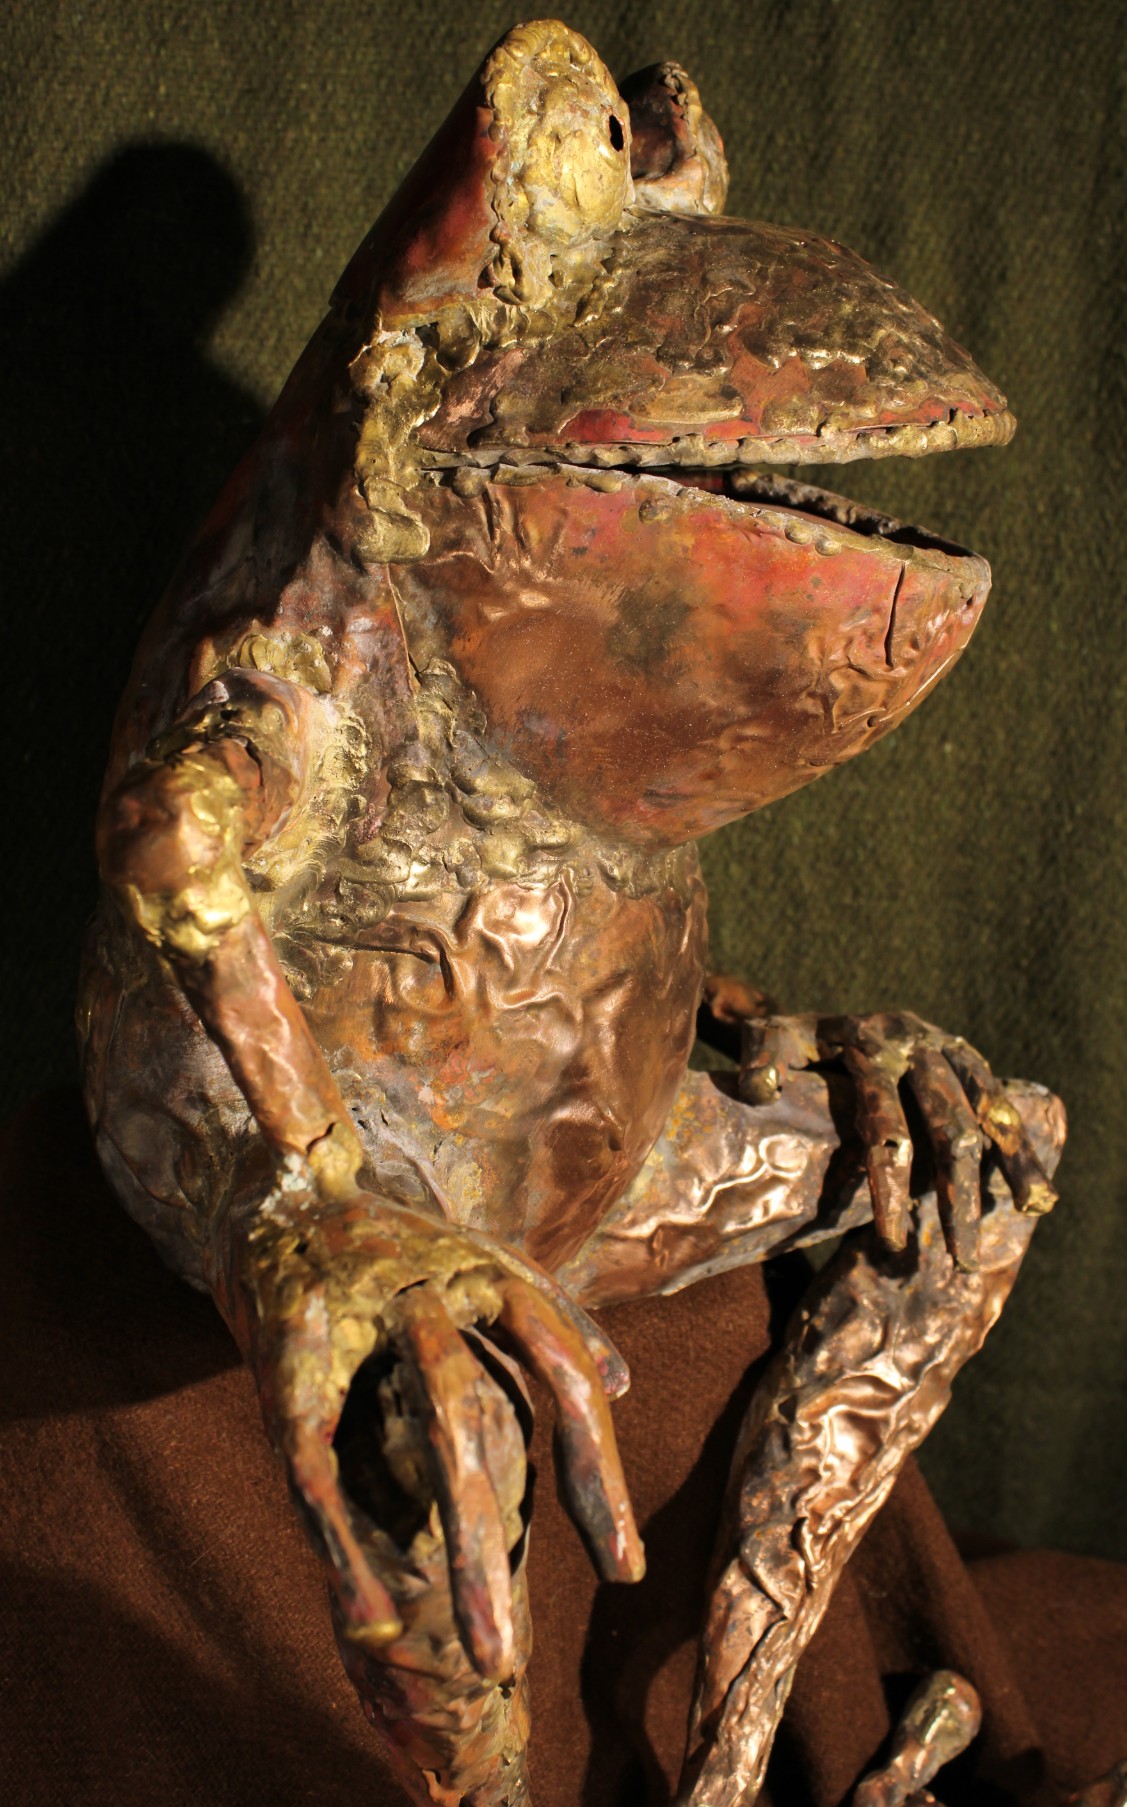 https://copperfrogart.com/wp-content/uploads/2020/07/medium-sized-seated-frog-sculpture-q-beau-smith-2020-a-3.jpg